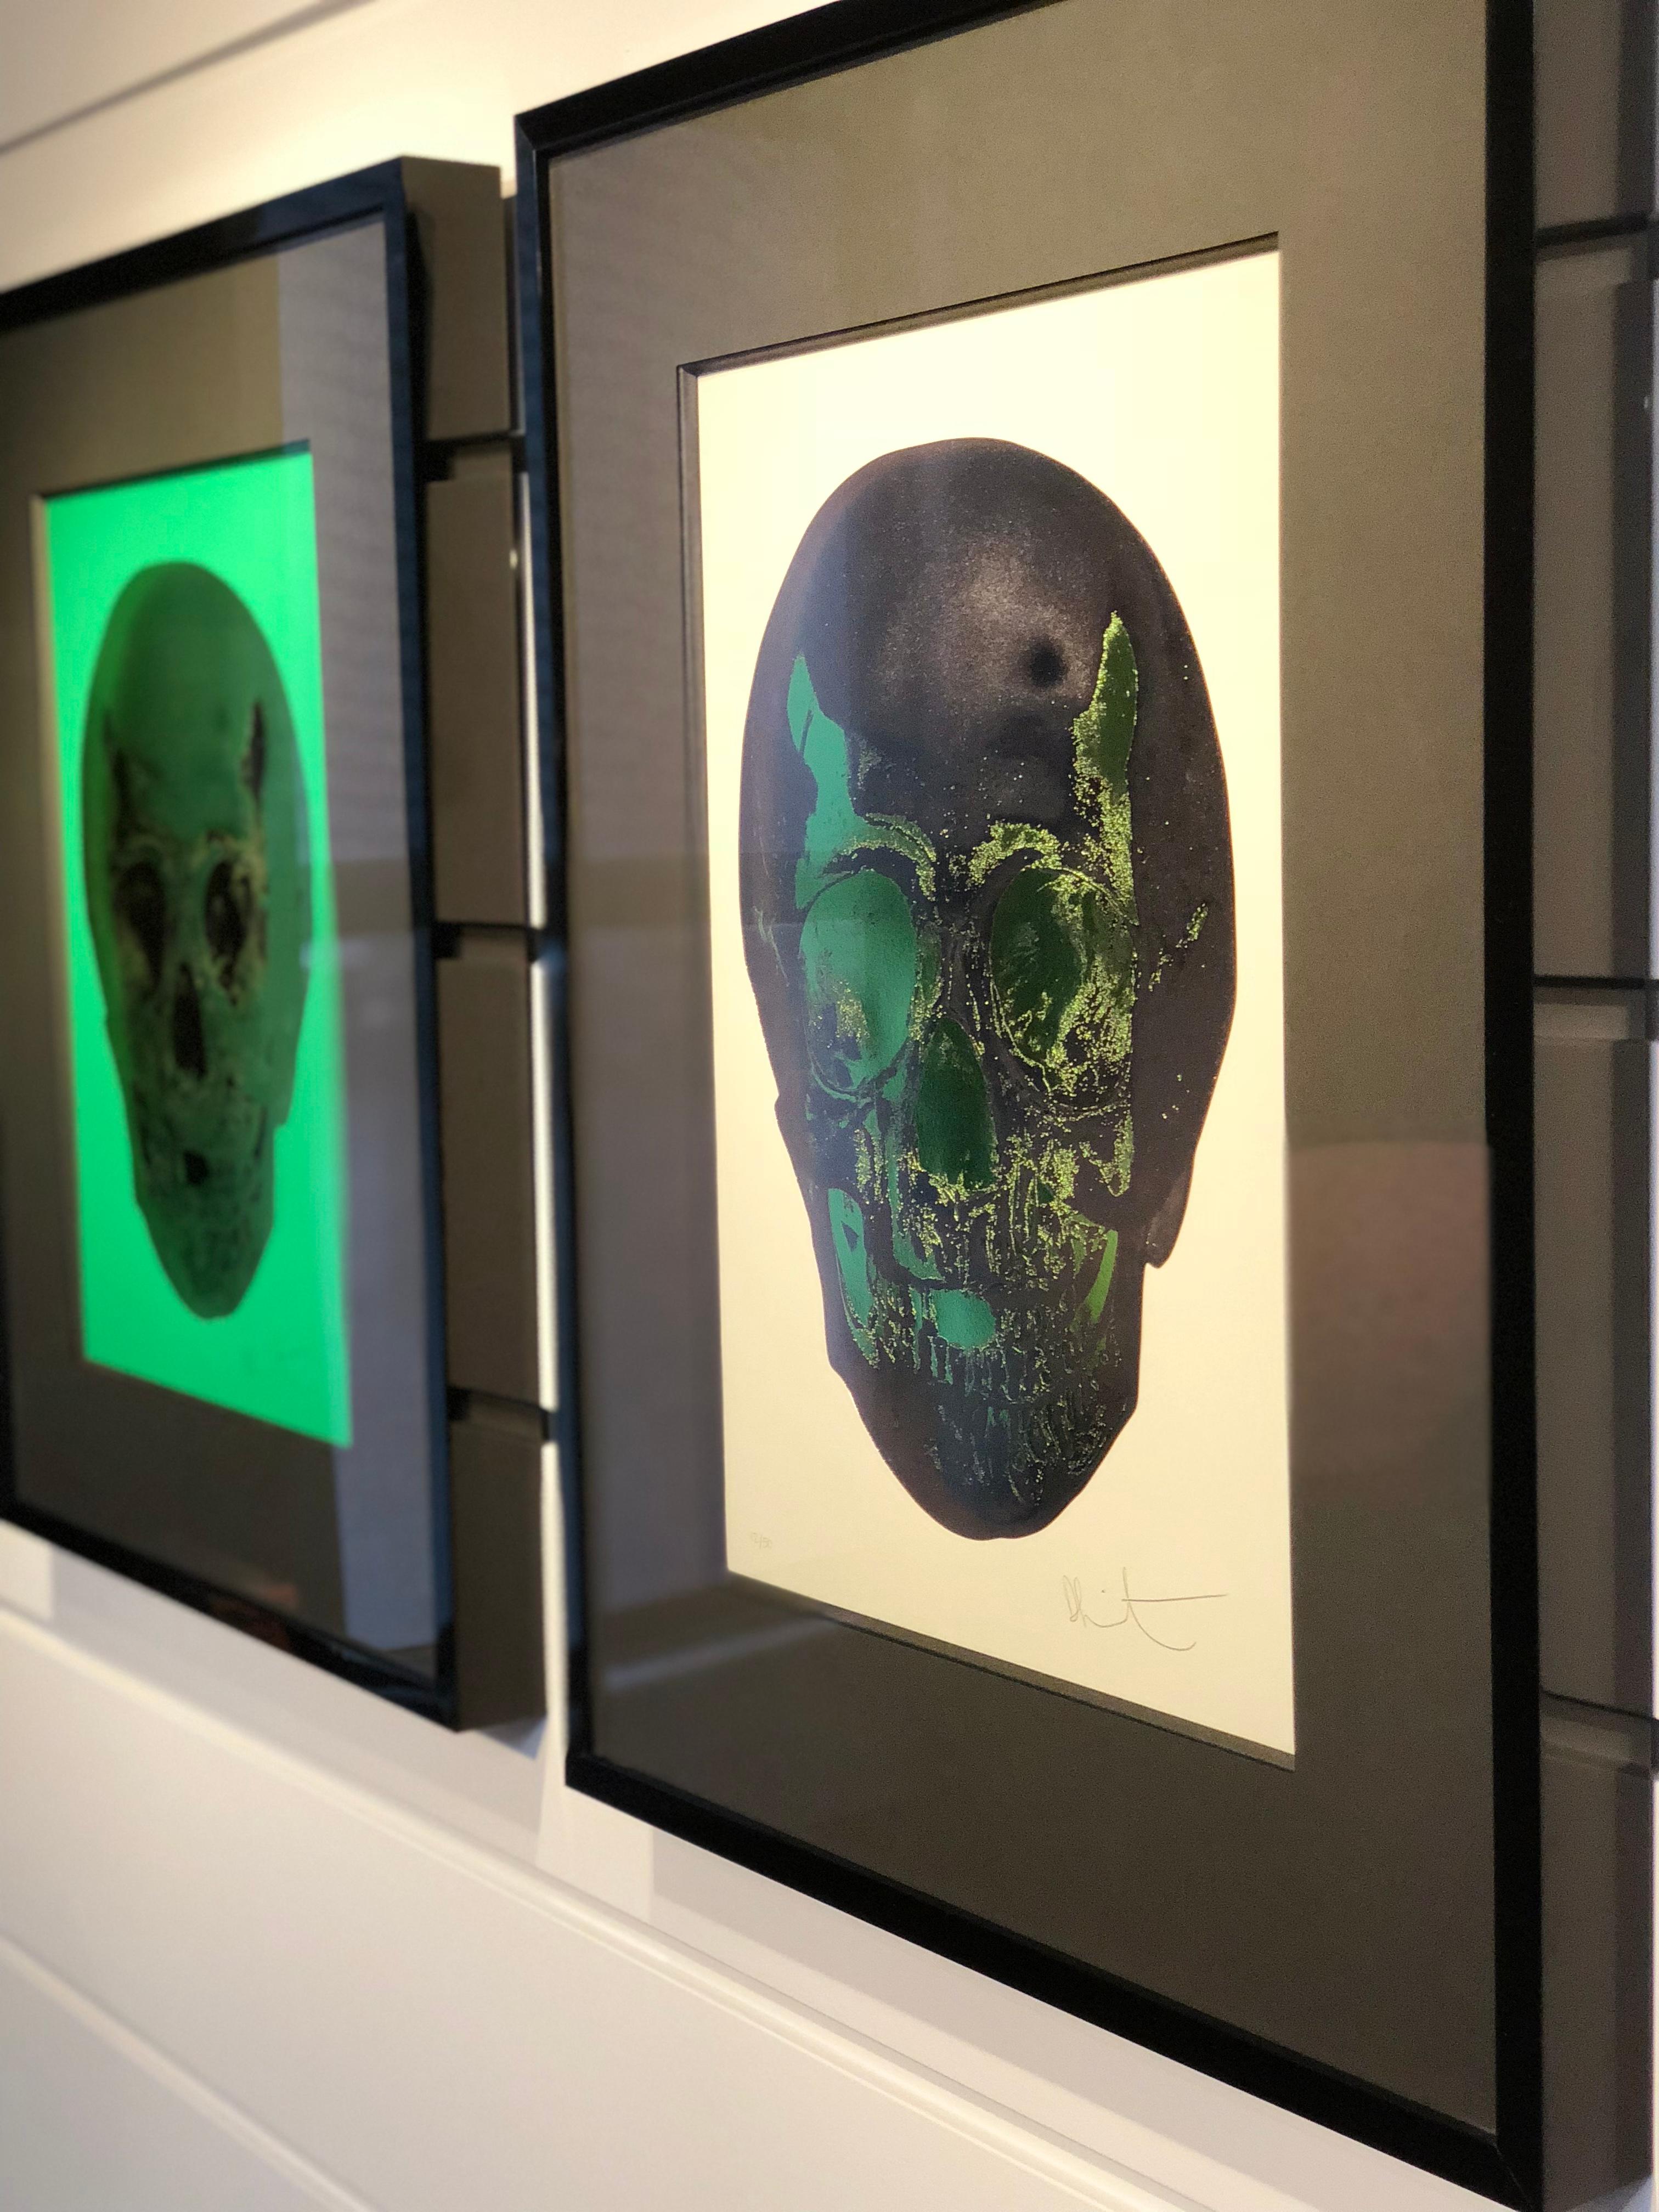 Skull, Until Death Do Us Part - Print by Damien Hirst